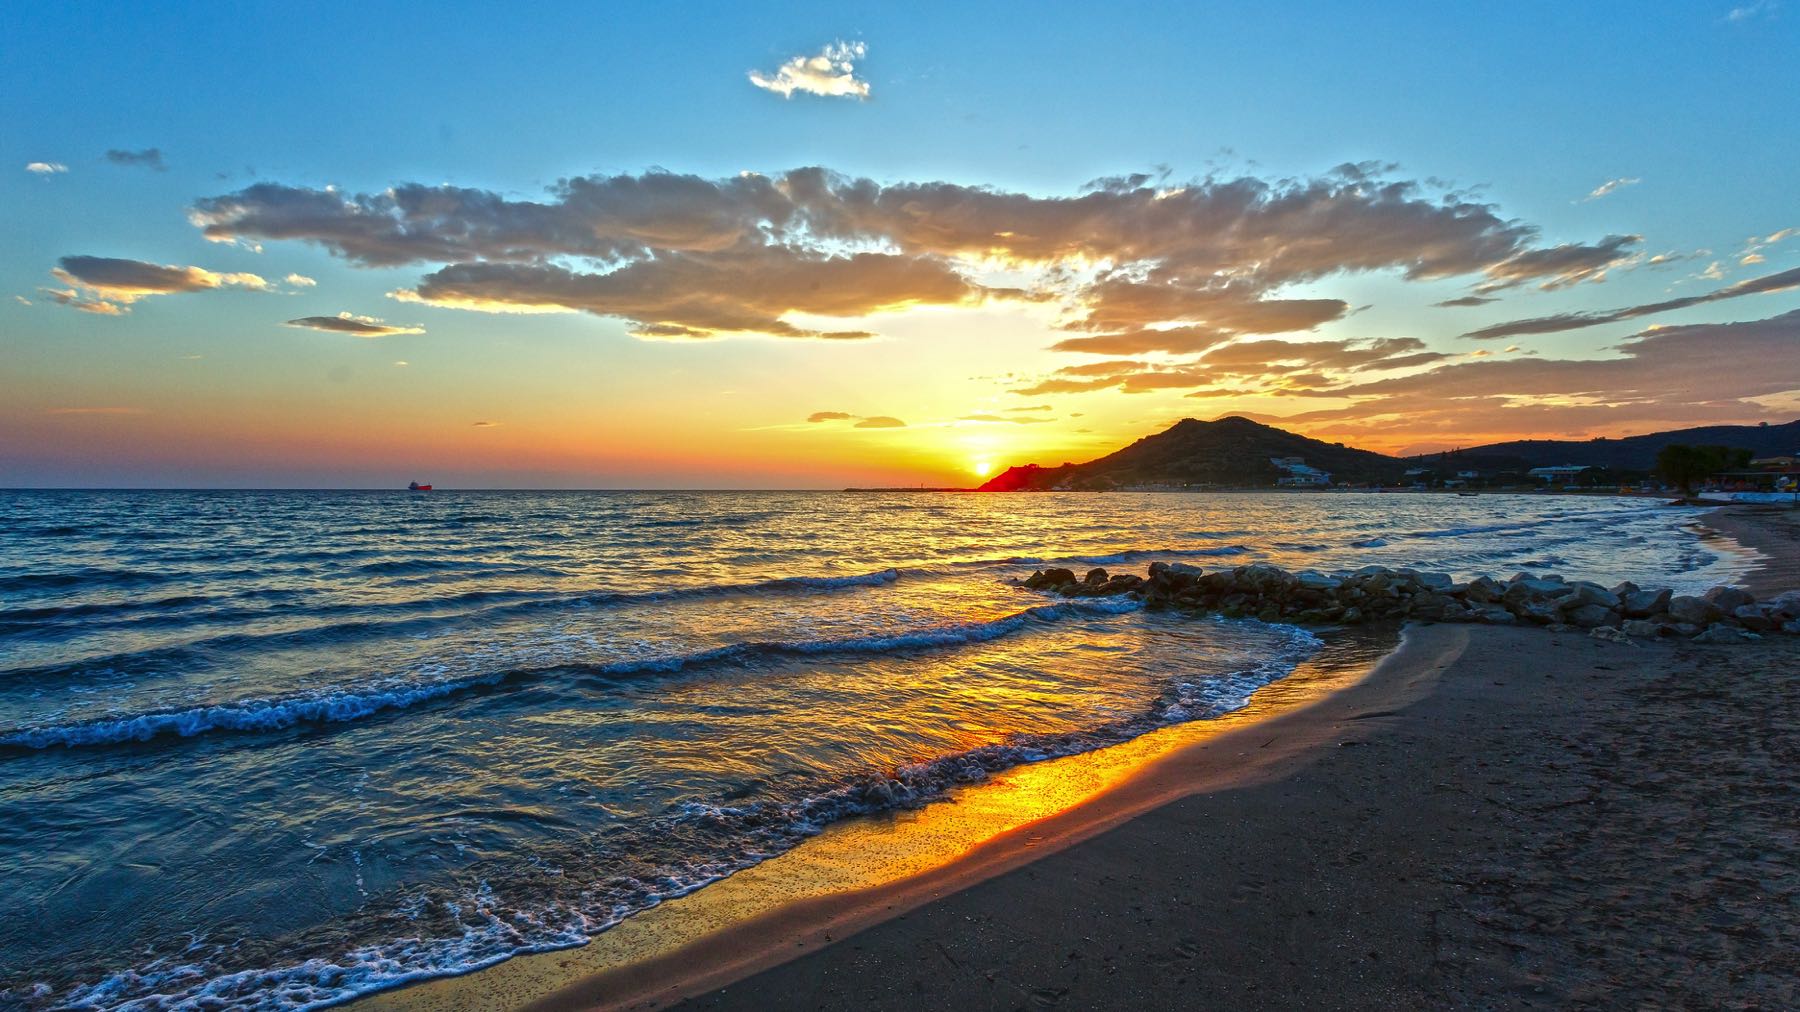 La plage d'Alykes à Zante en Grèce : Guide de voyage 2022 - La plage d'Alykes à Zante en Grèce : Guide de voyage 2022